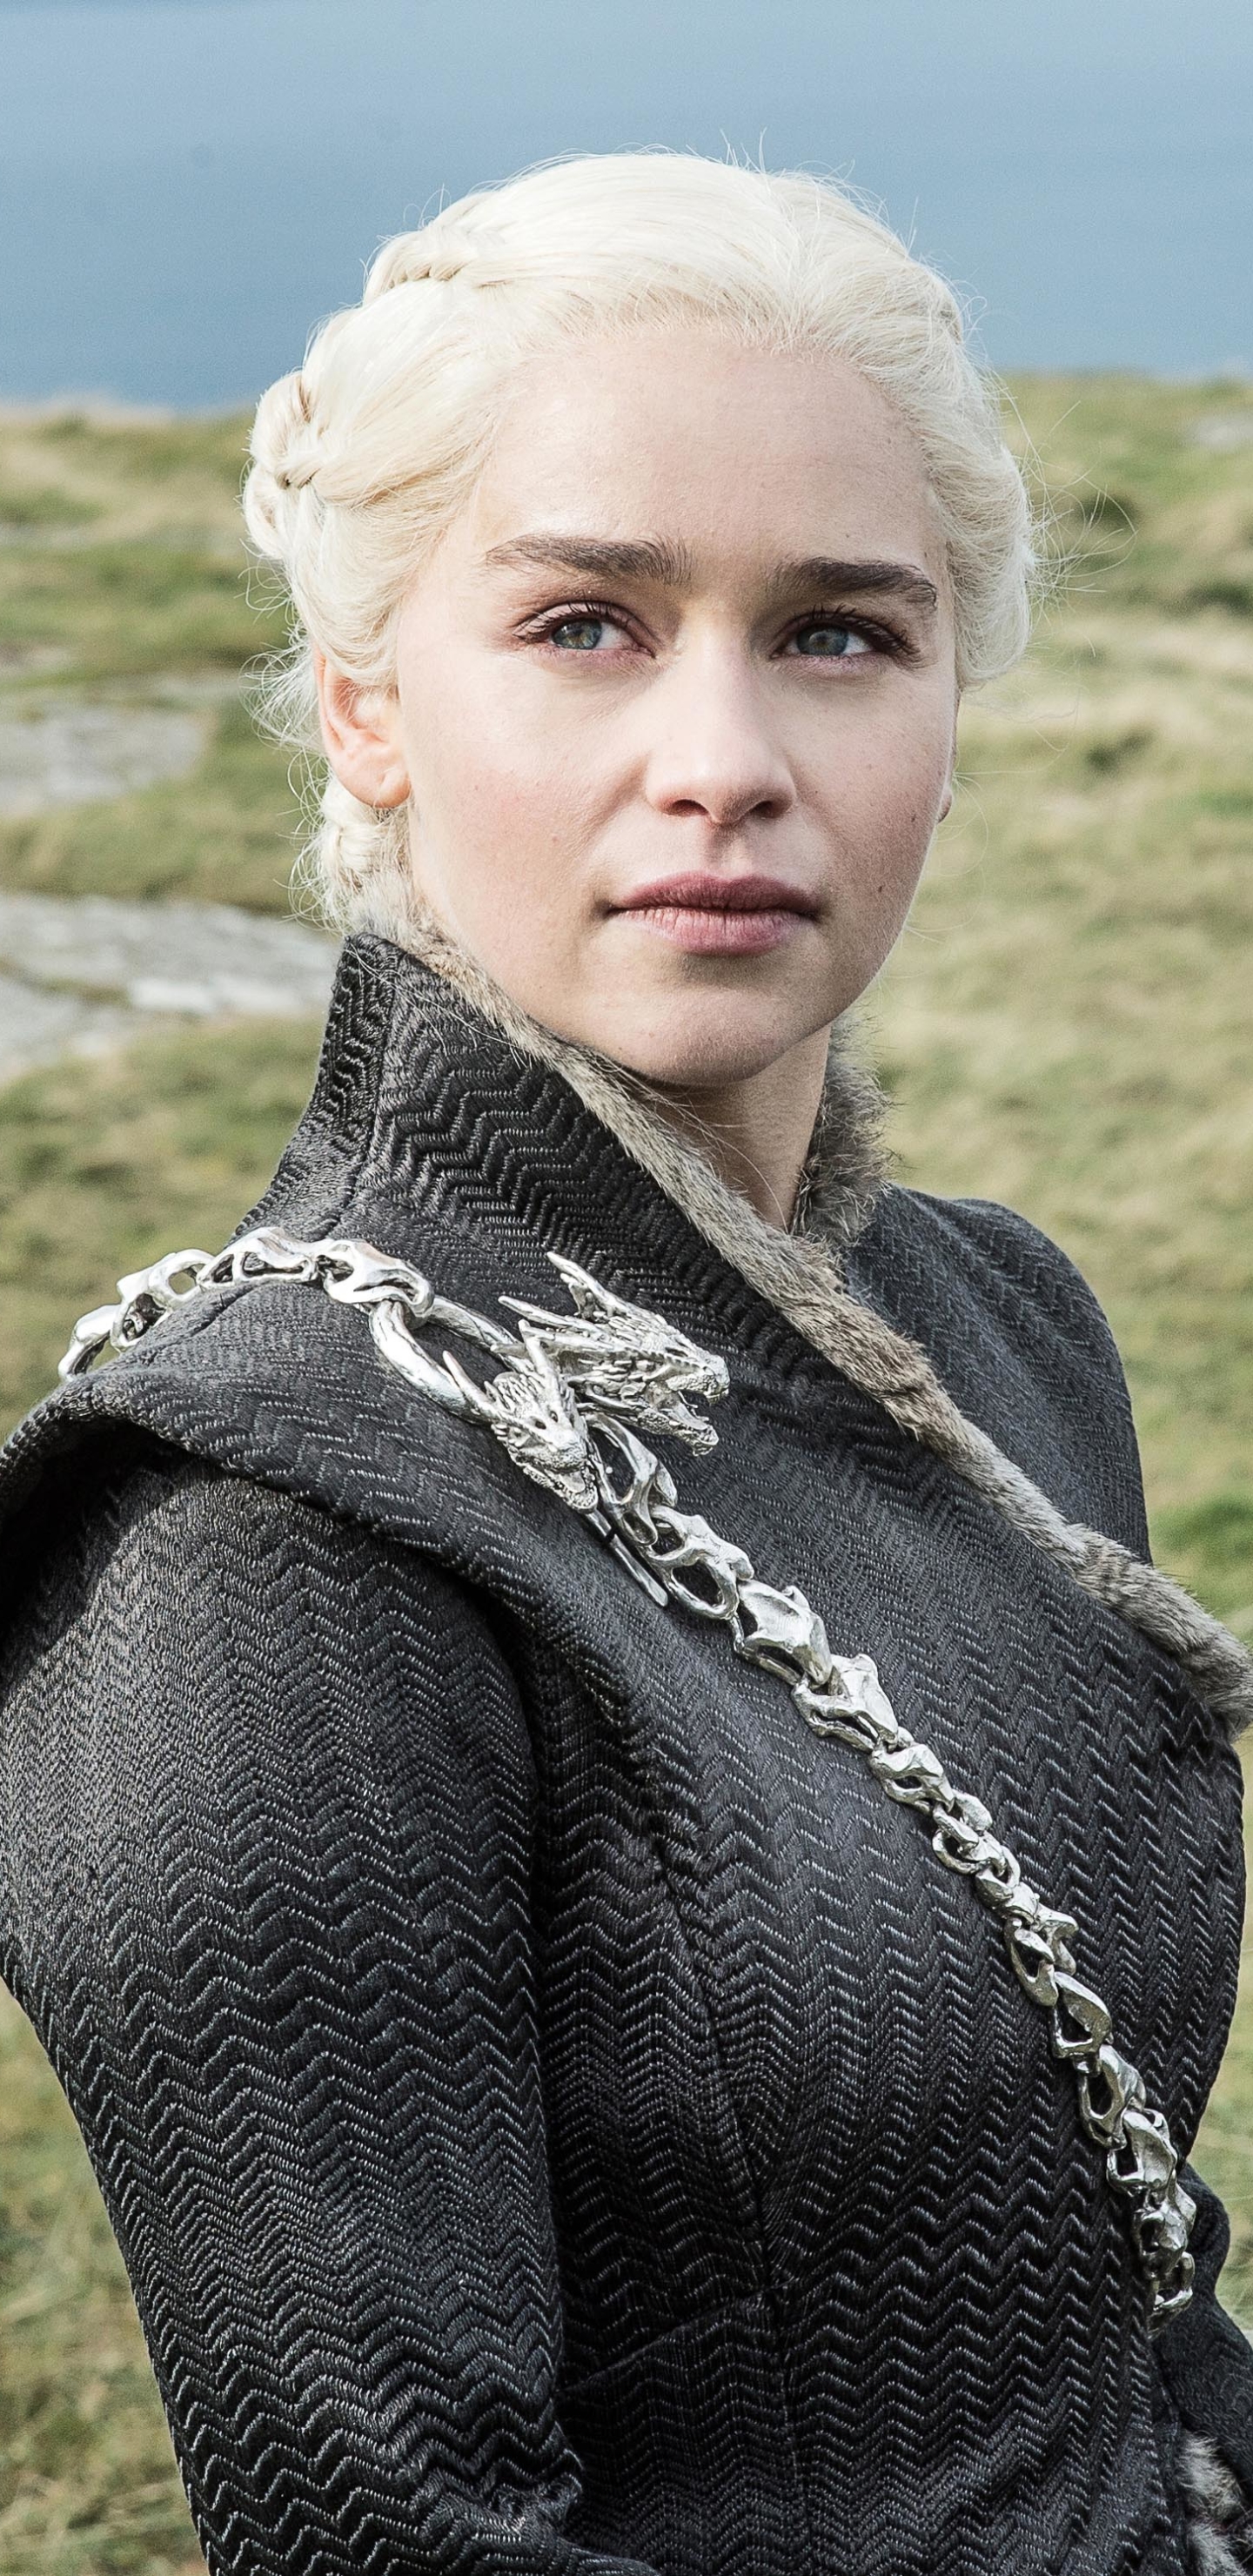 Game of Thrones Daenerys Targaryen Wallpaper for iPhone 4